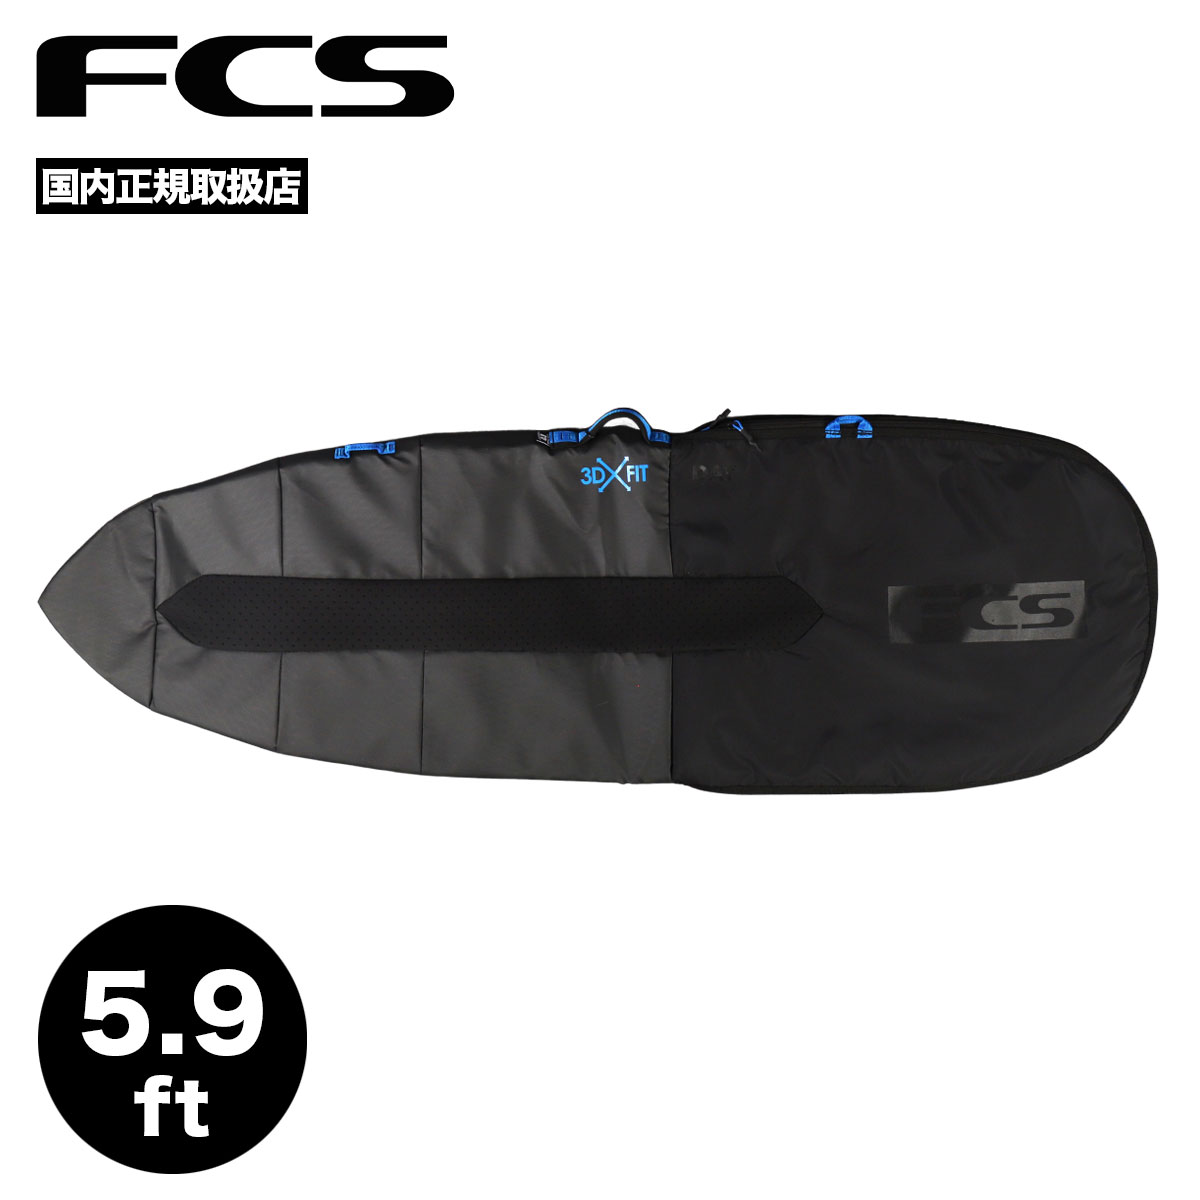 FCS エフシーエス サーフィン ハードケース 5.9 デイ ファンボード ボードケース ミッドレングス ショートボード ブランド ハードカバー DAY FUN BOARD【BDY-059-FB-BLK-22】